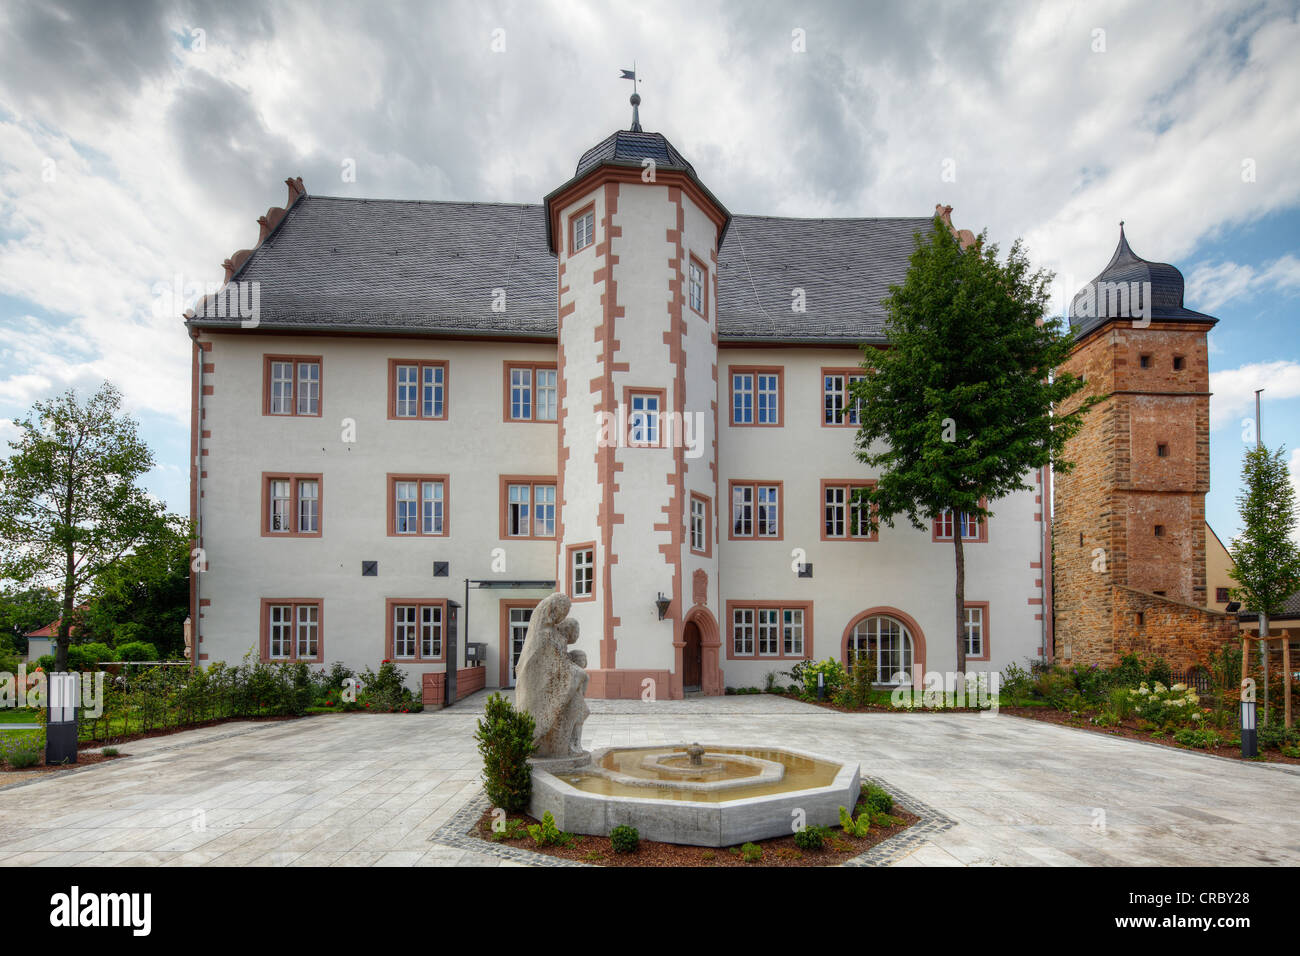 Alte Vogtei administrative building, Gerolzhofen, Lower Franconia, Franconia, Bavaria, Germany, Europe, PublicGround Stock Photo